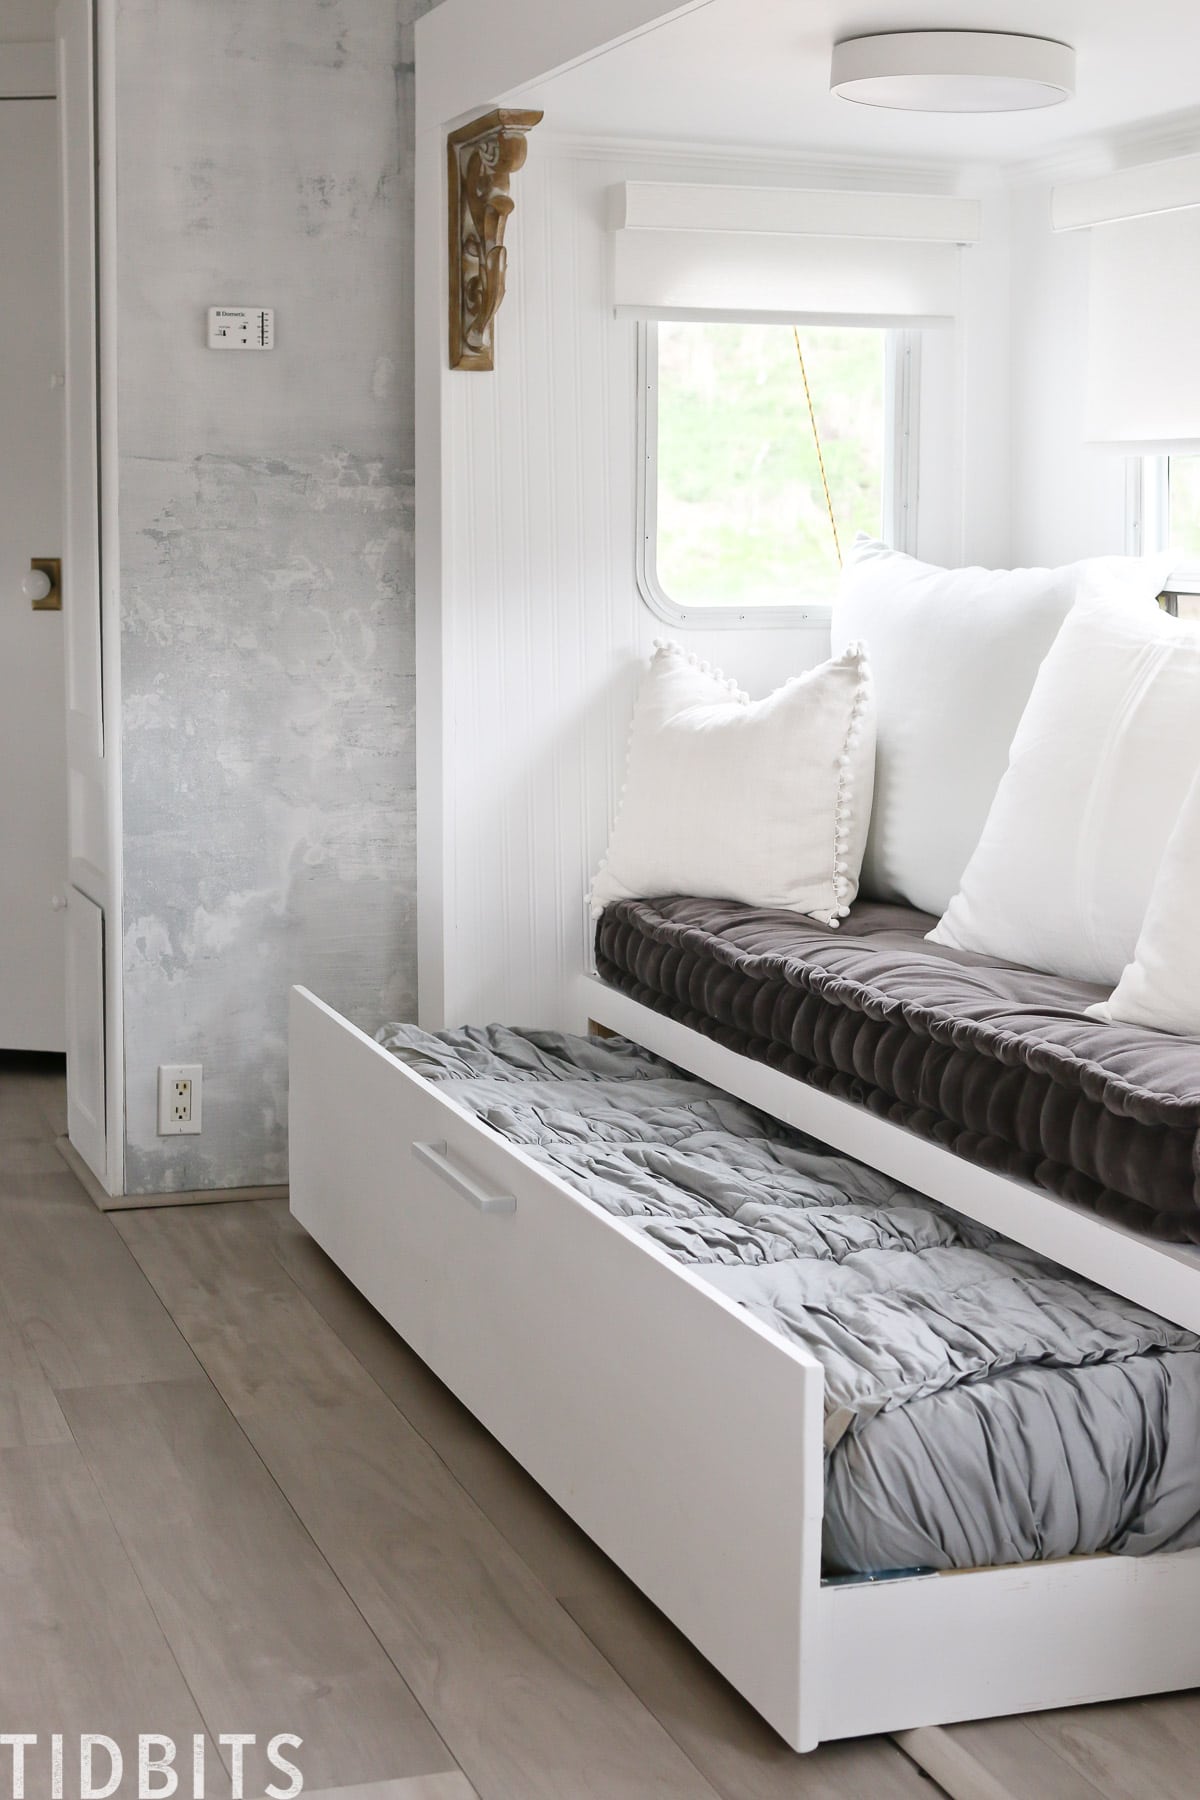 The Best Rv Bunk Bedding Tidbits, Rv Bunk Bed Comforter